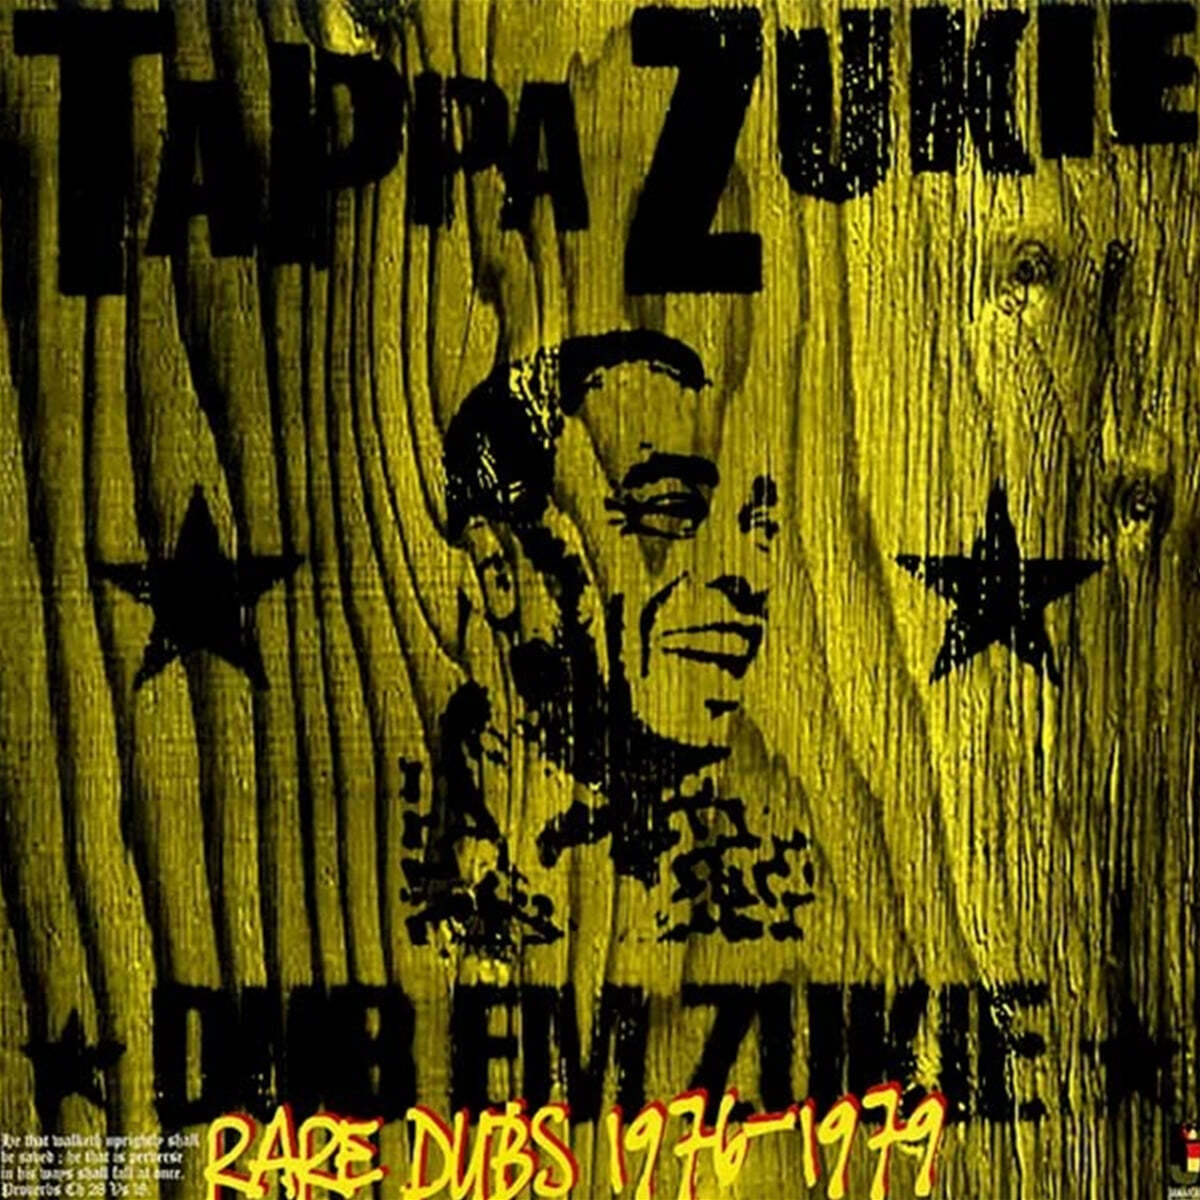 Tappa Zukie (탭퍼 주키) - Dub Em Zukie - Rare Dubs 1976-1979 [LP] 